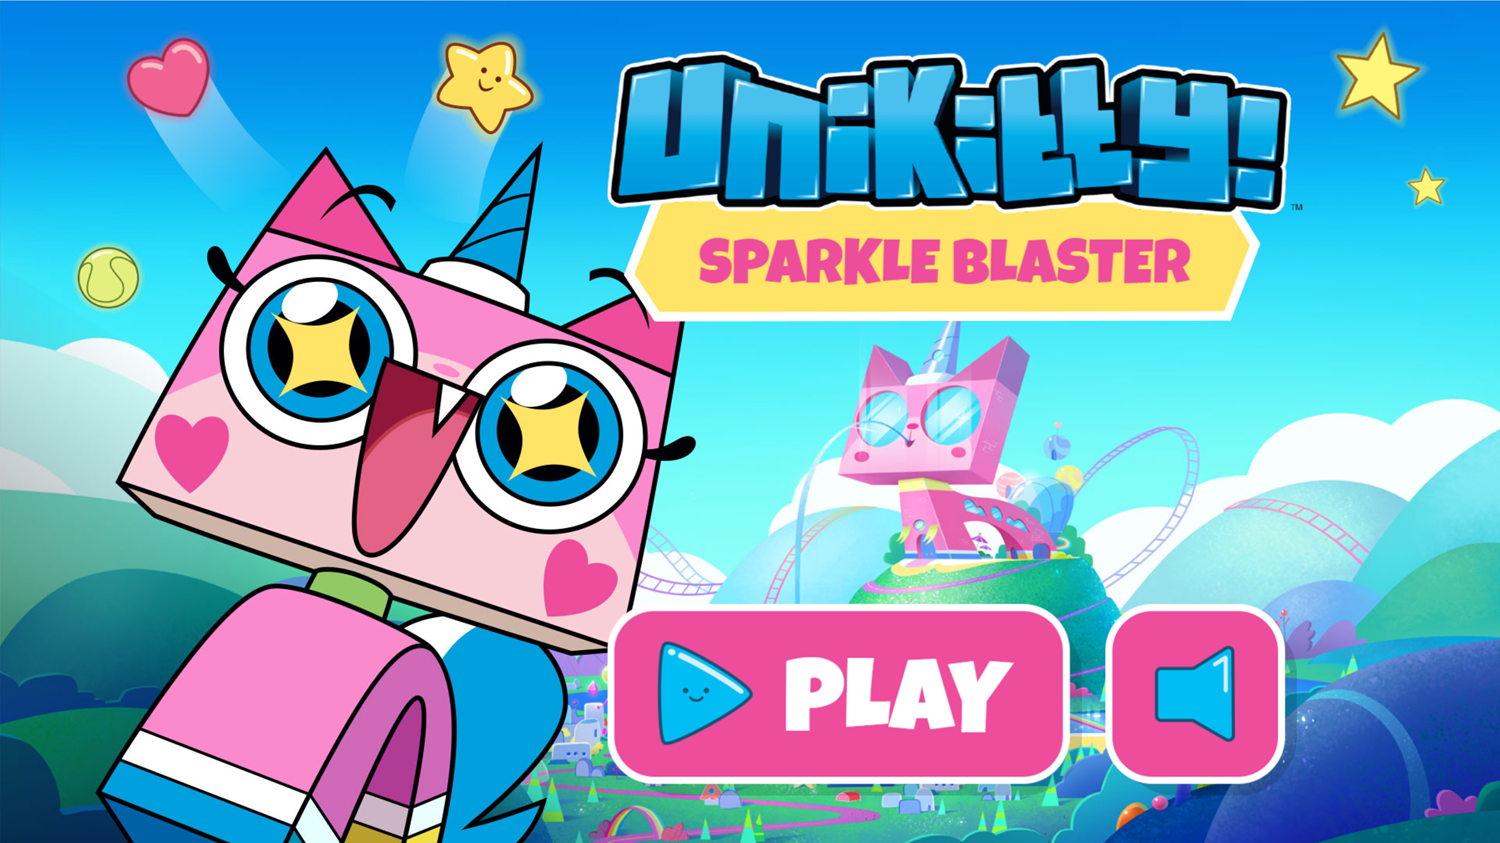 UniKitty Sparkle Blaster Welcome Screen Screenshot.